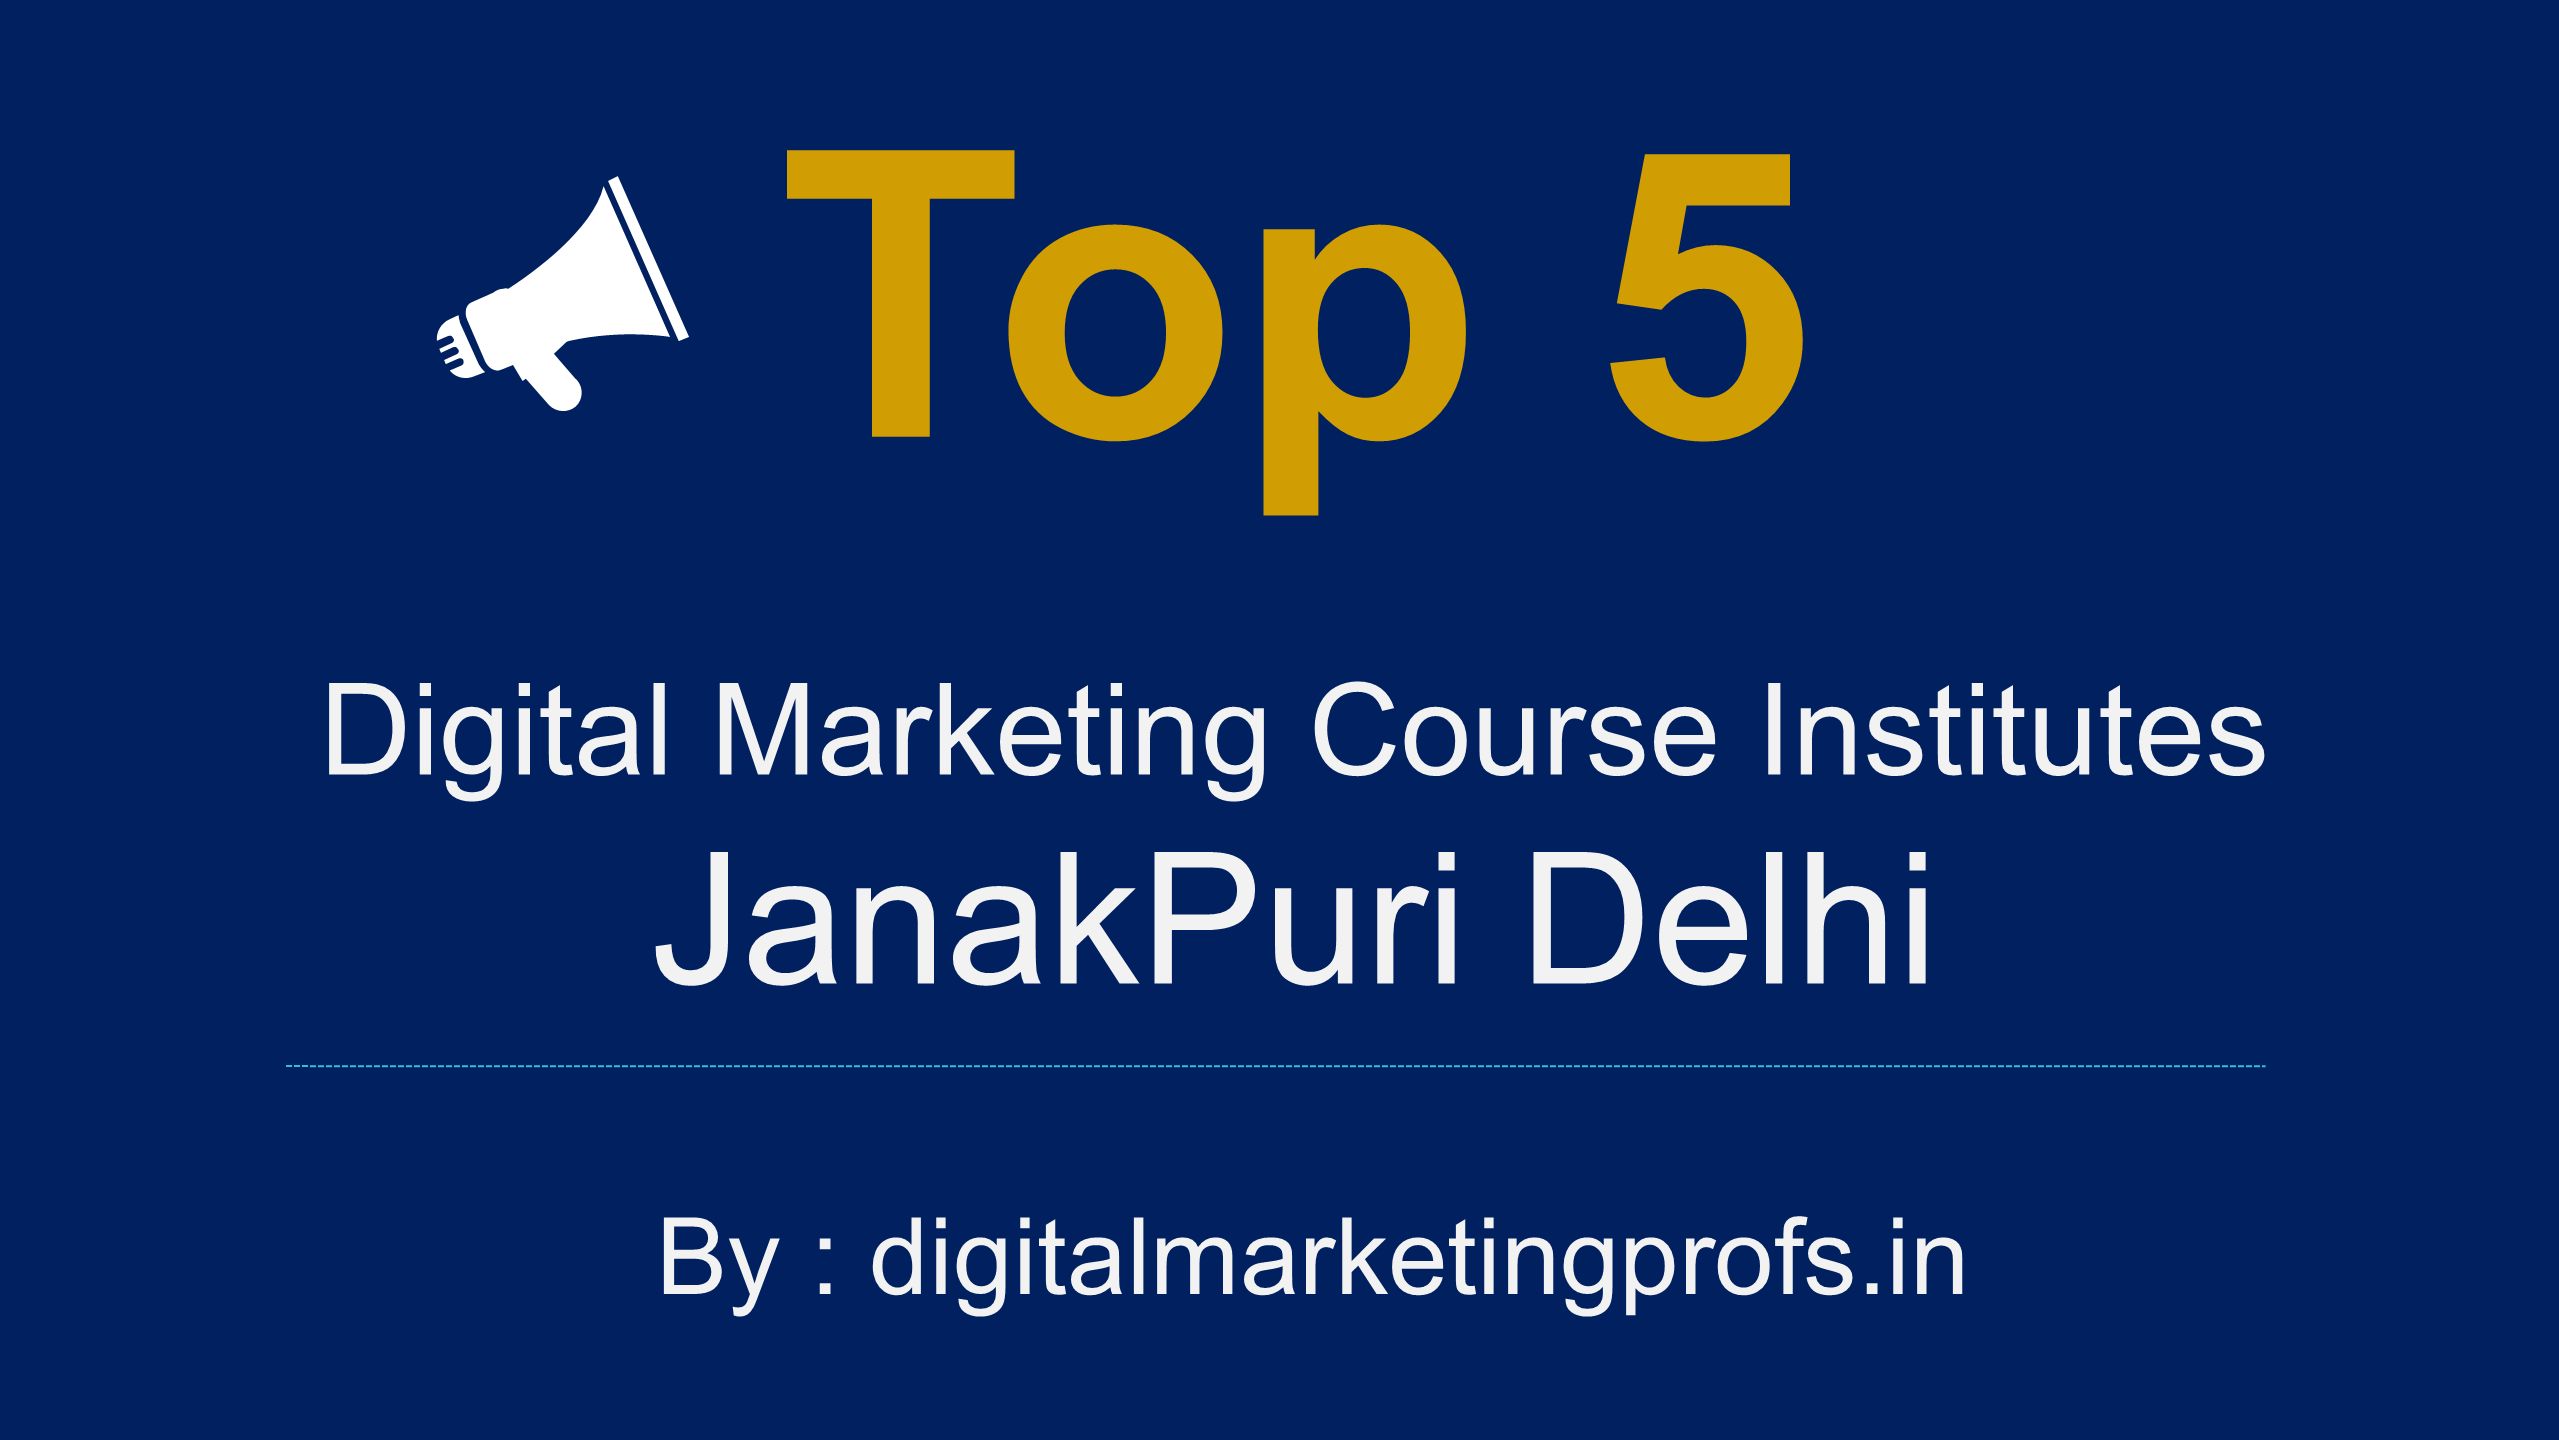 Digital Marketing Course Institutes JanakPuri Delhi Top 5 By : digitalmarketingprofs.in